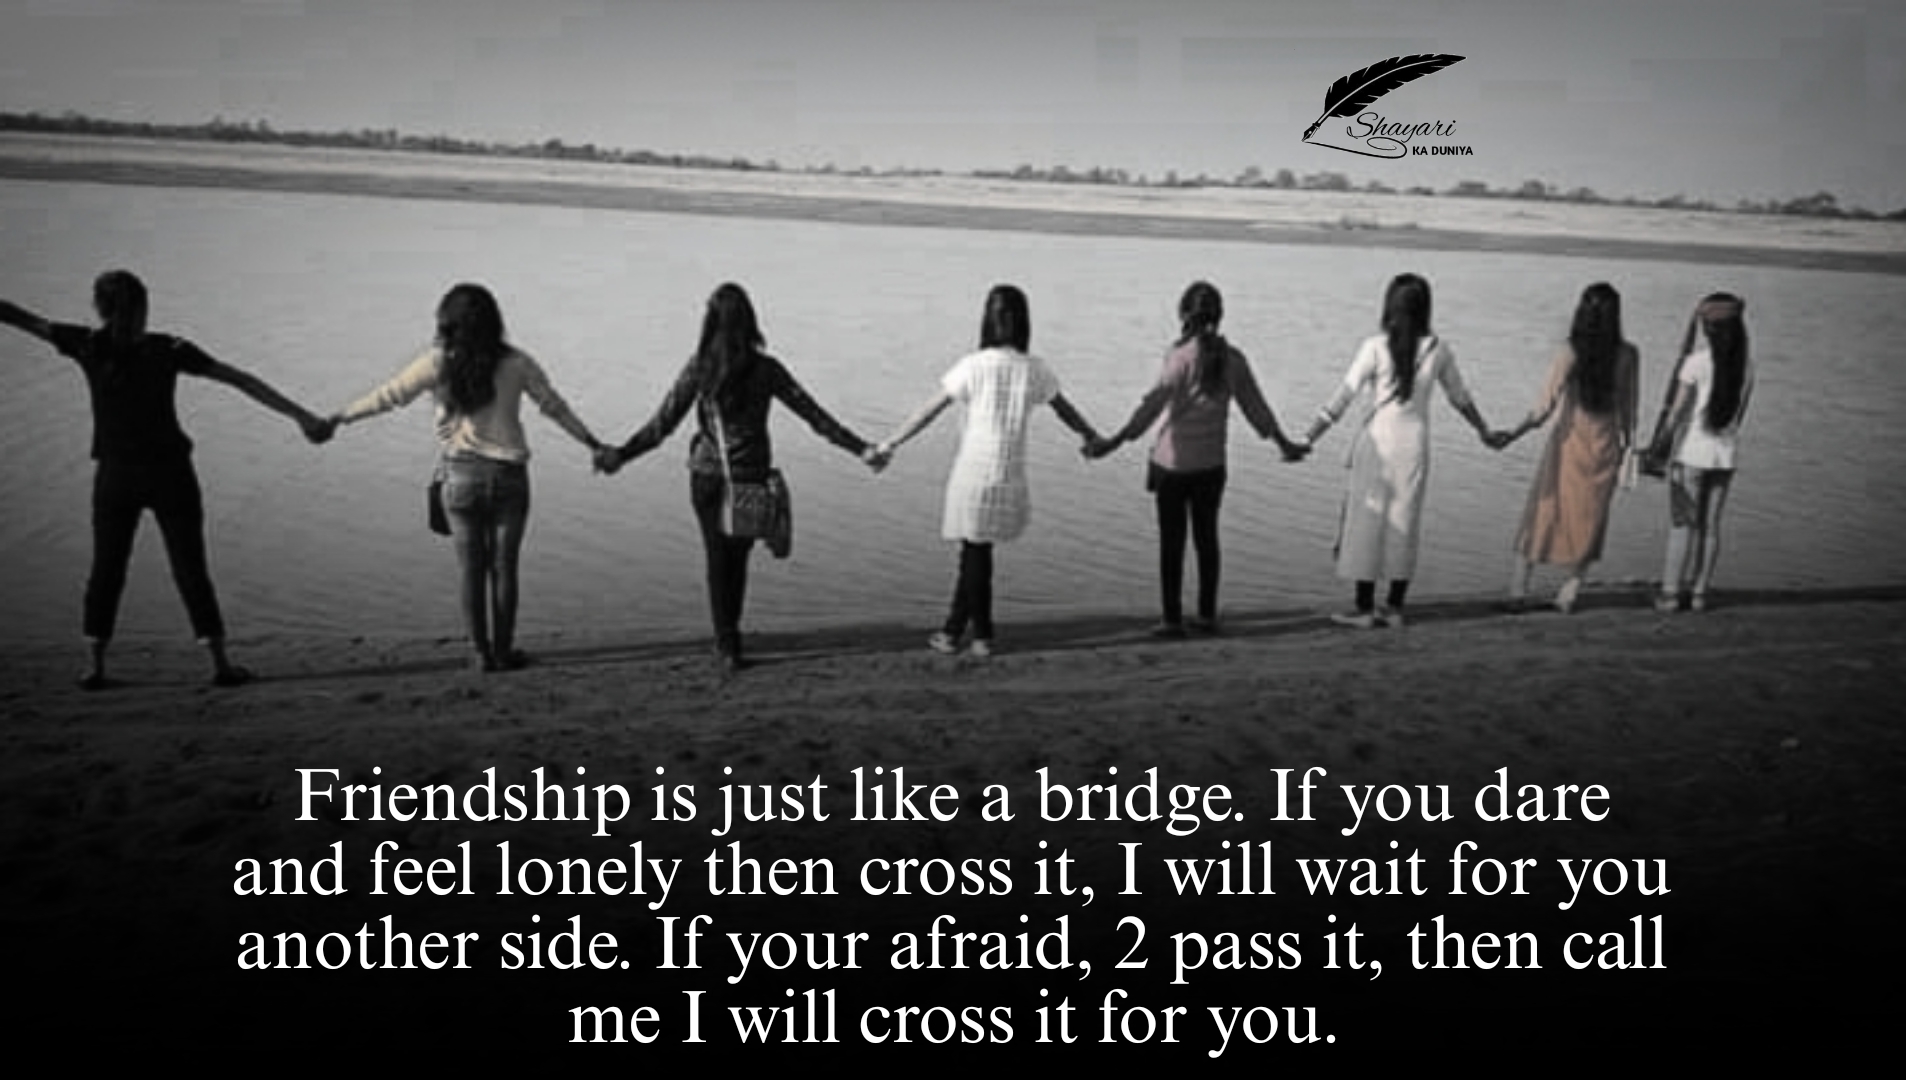 Friendship Is Just Like a Bridge